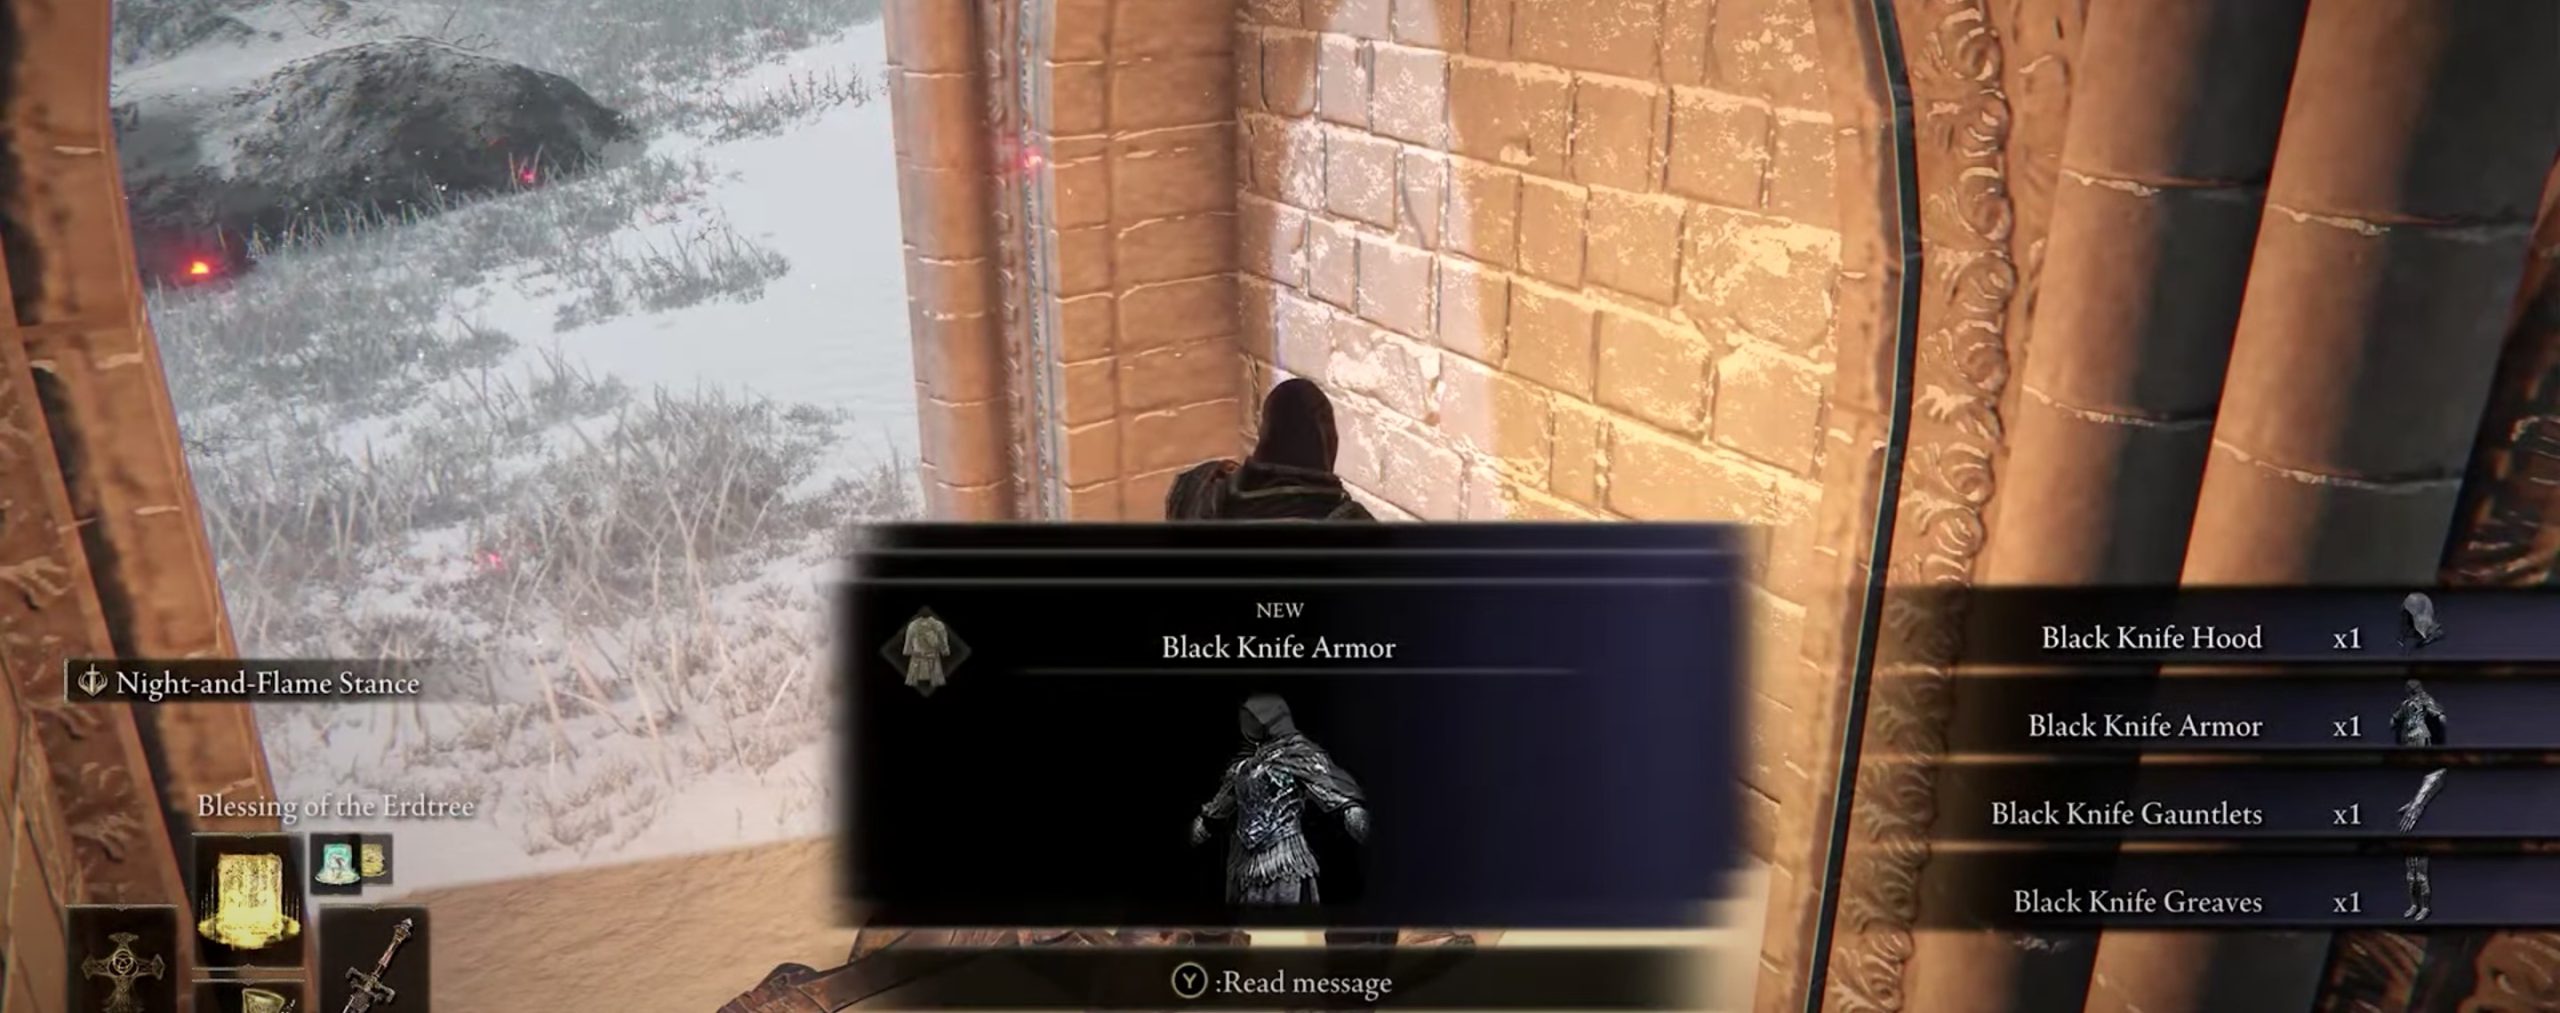 Black Knife Armor Items